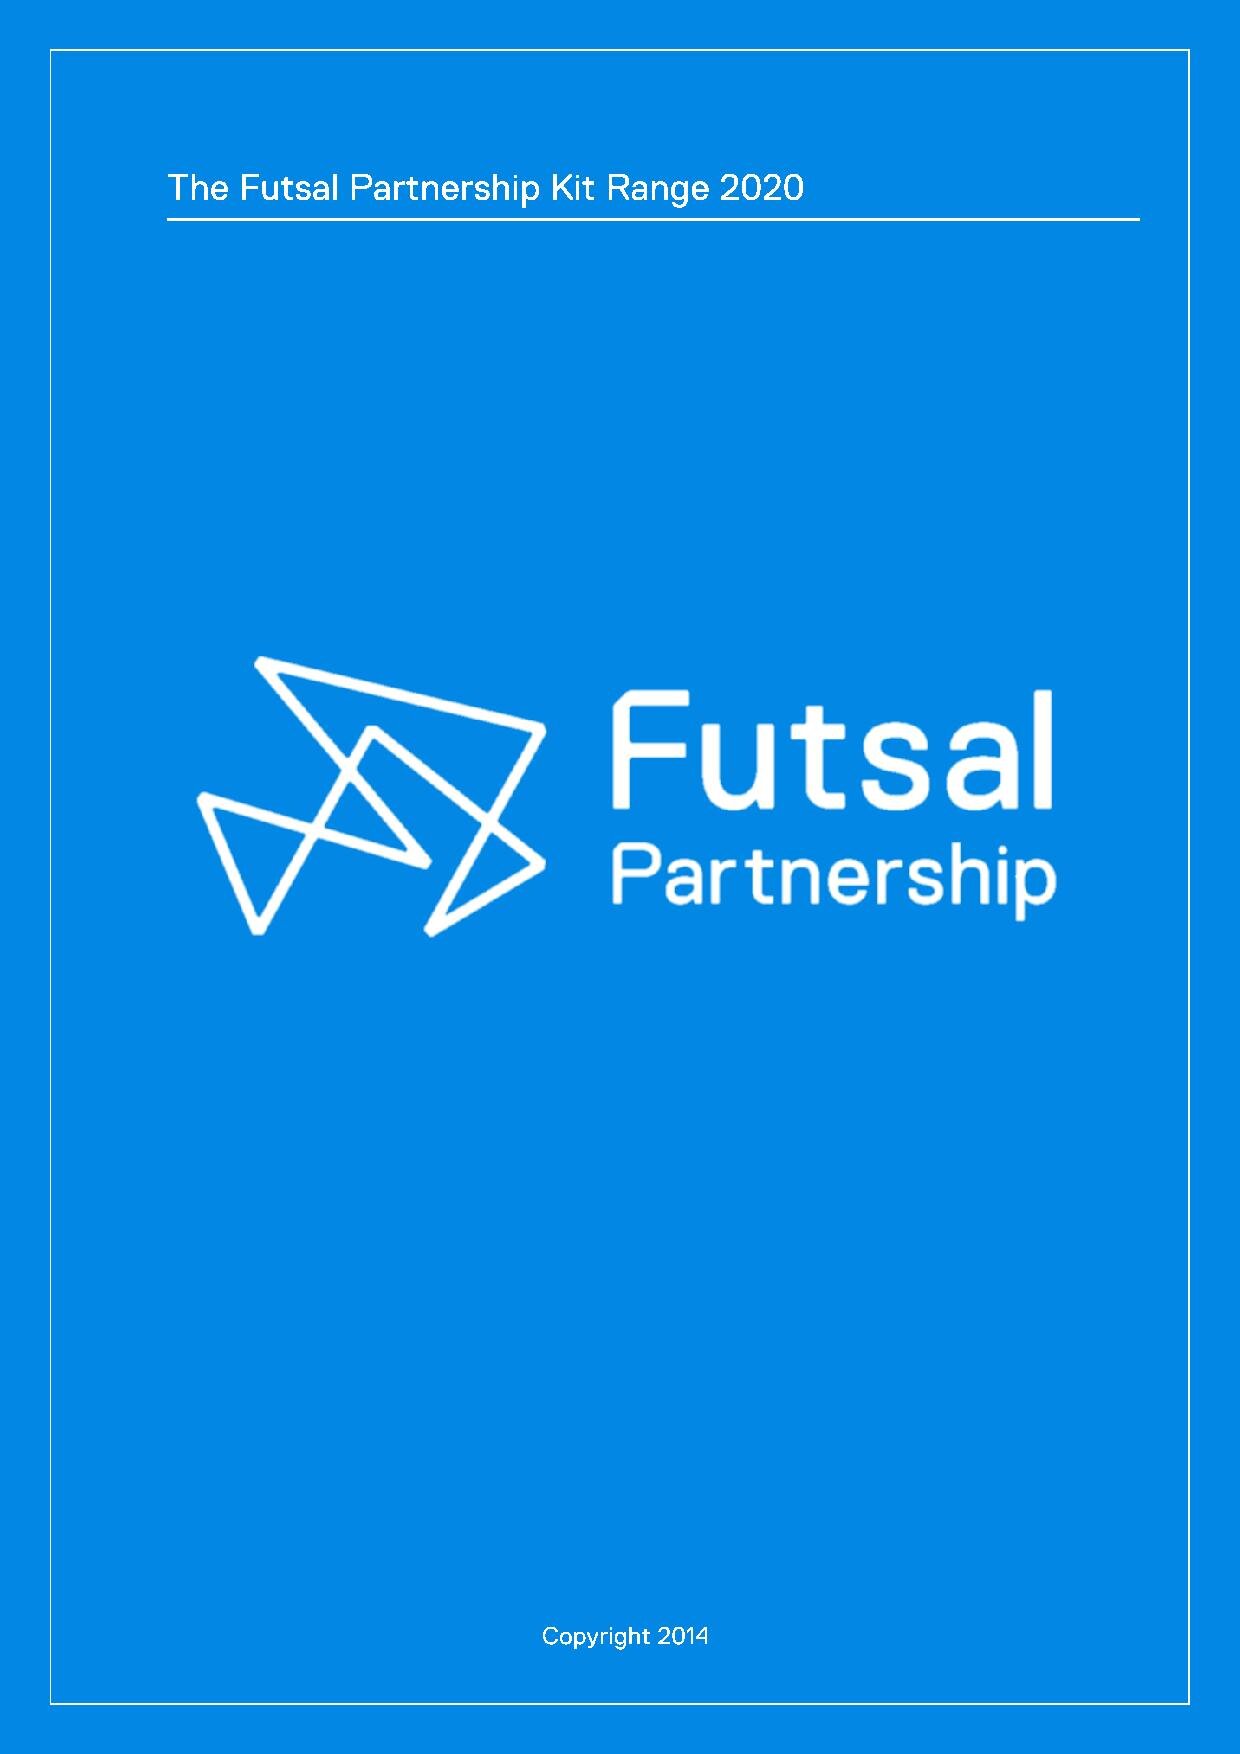 The Futsal Partnership Kit Range 2020-page-001.jpg